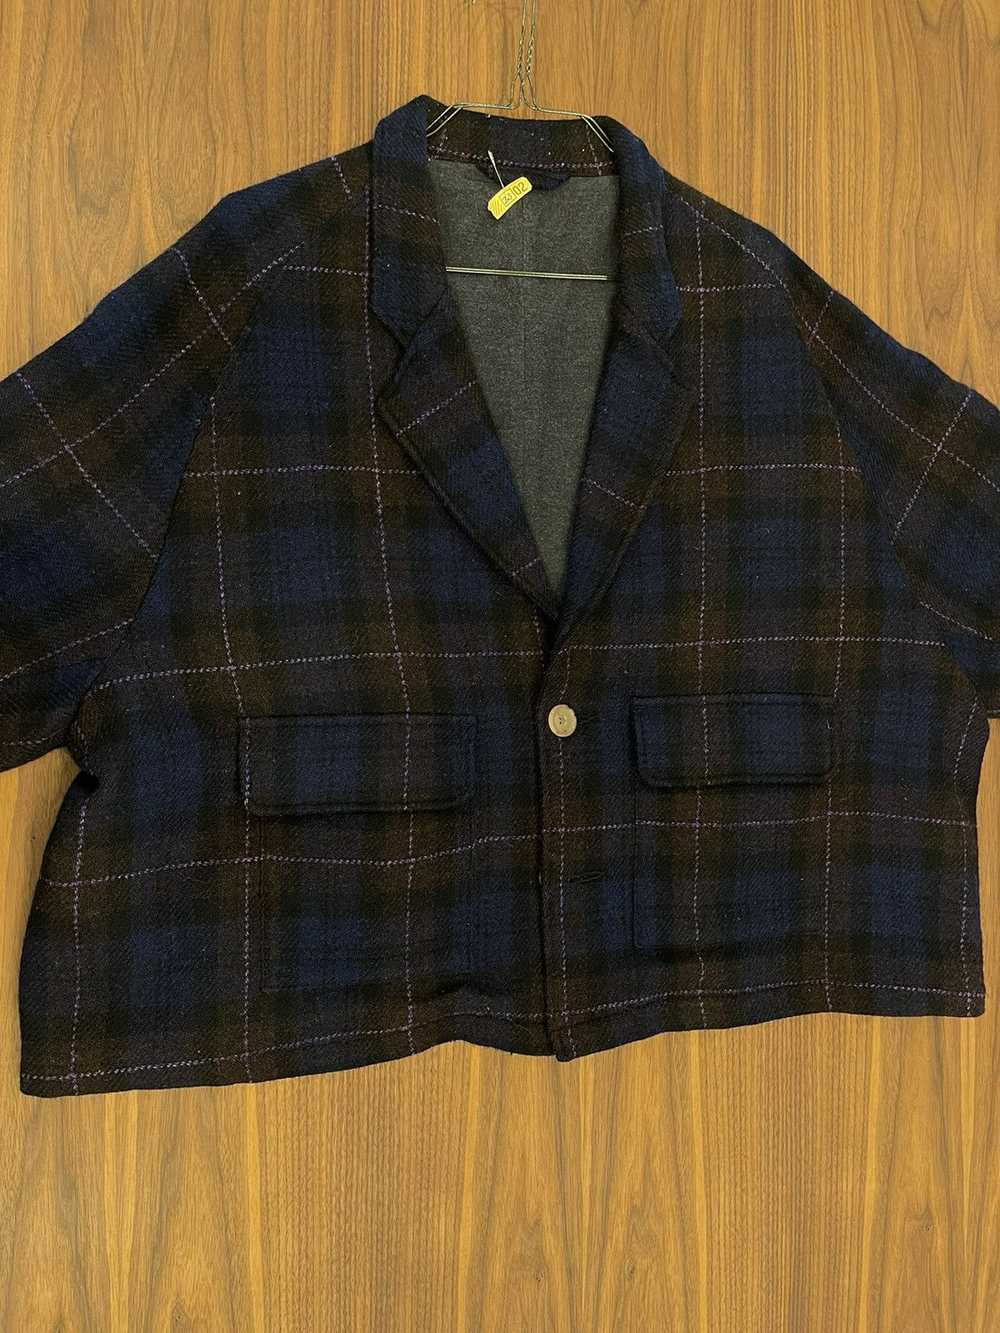 Sillage Sillage - wool check jacket - Gem